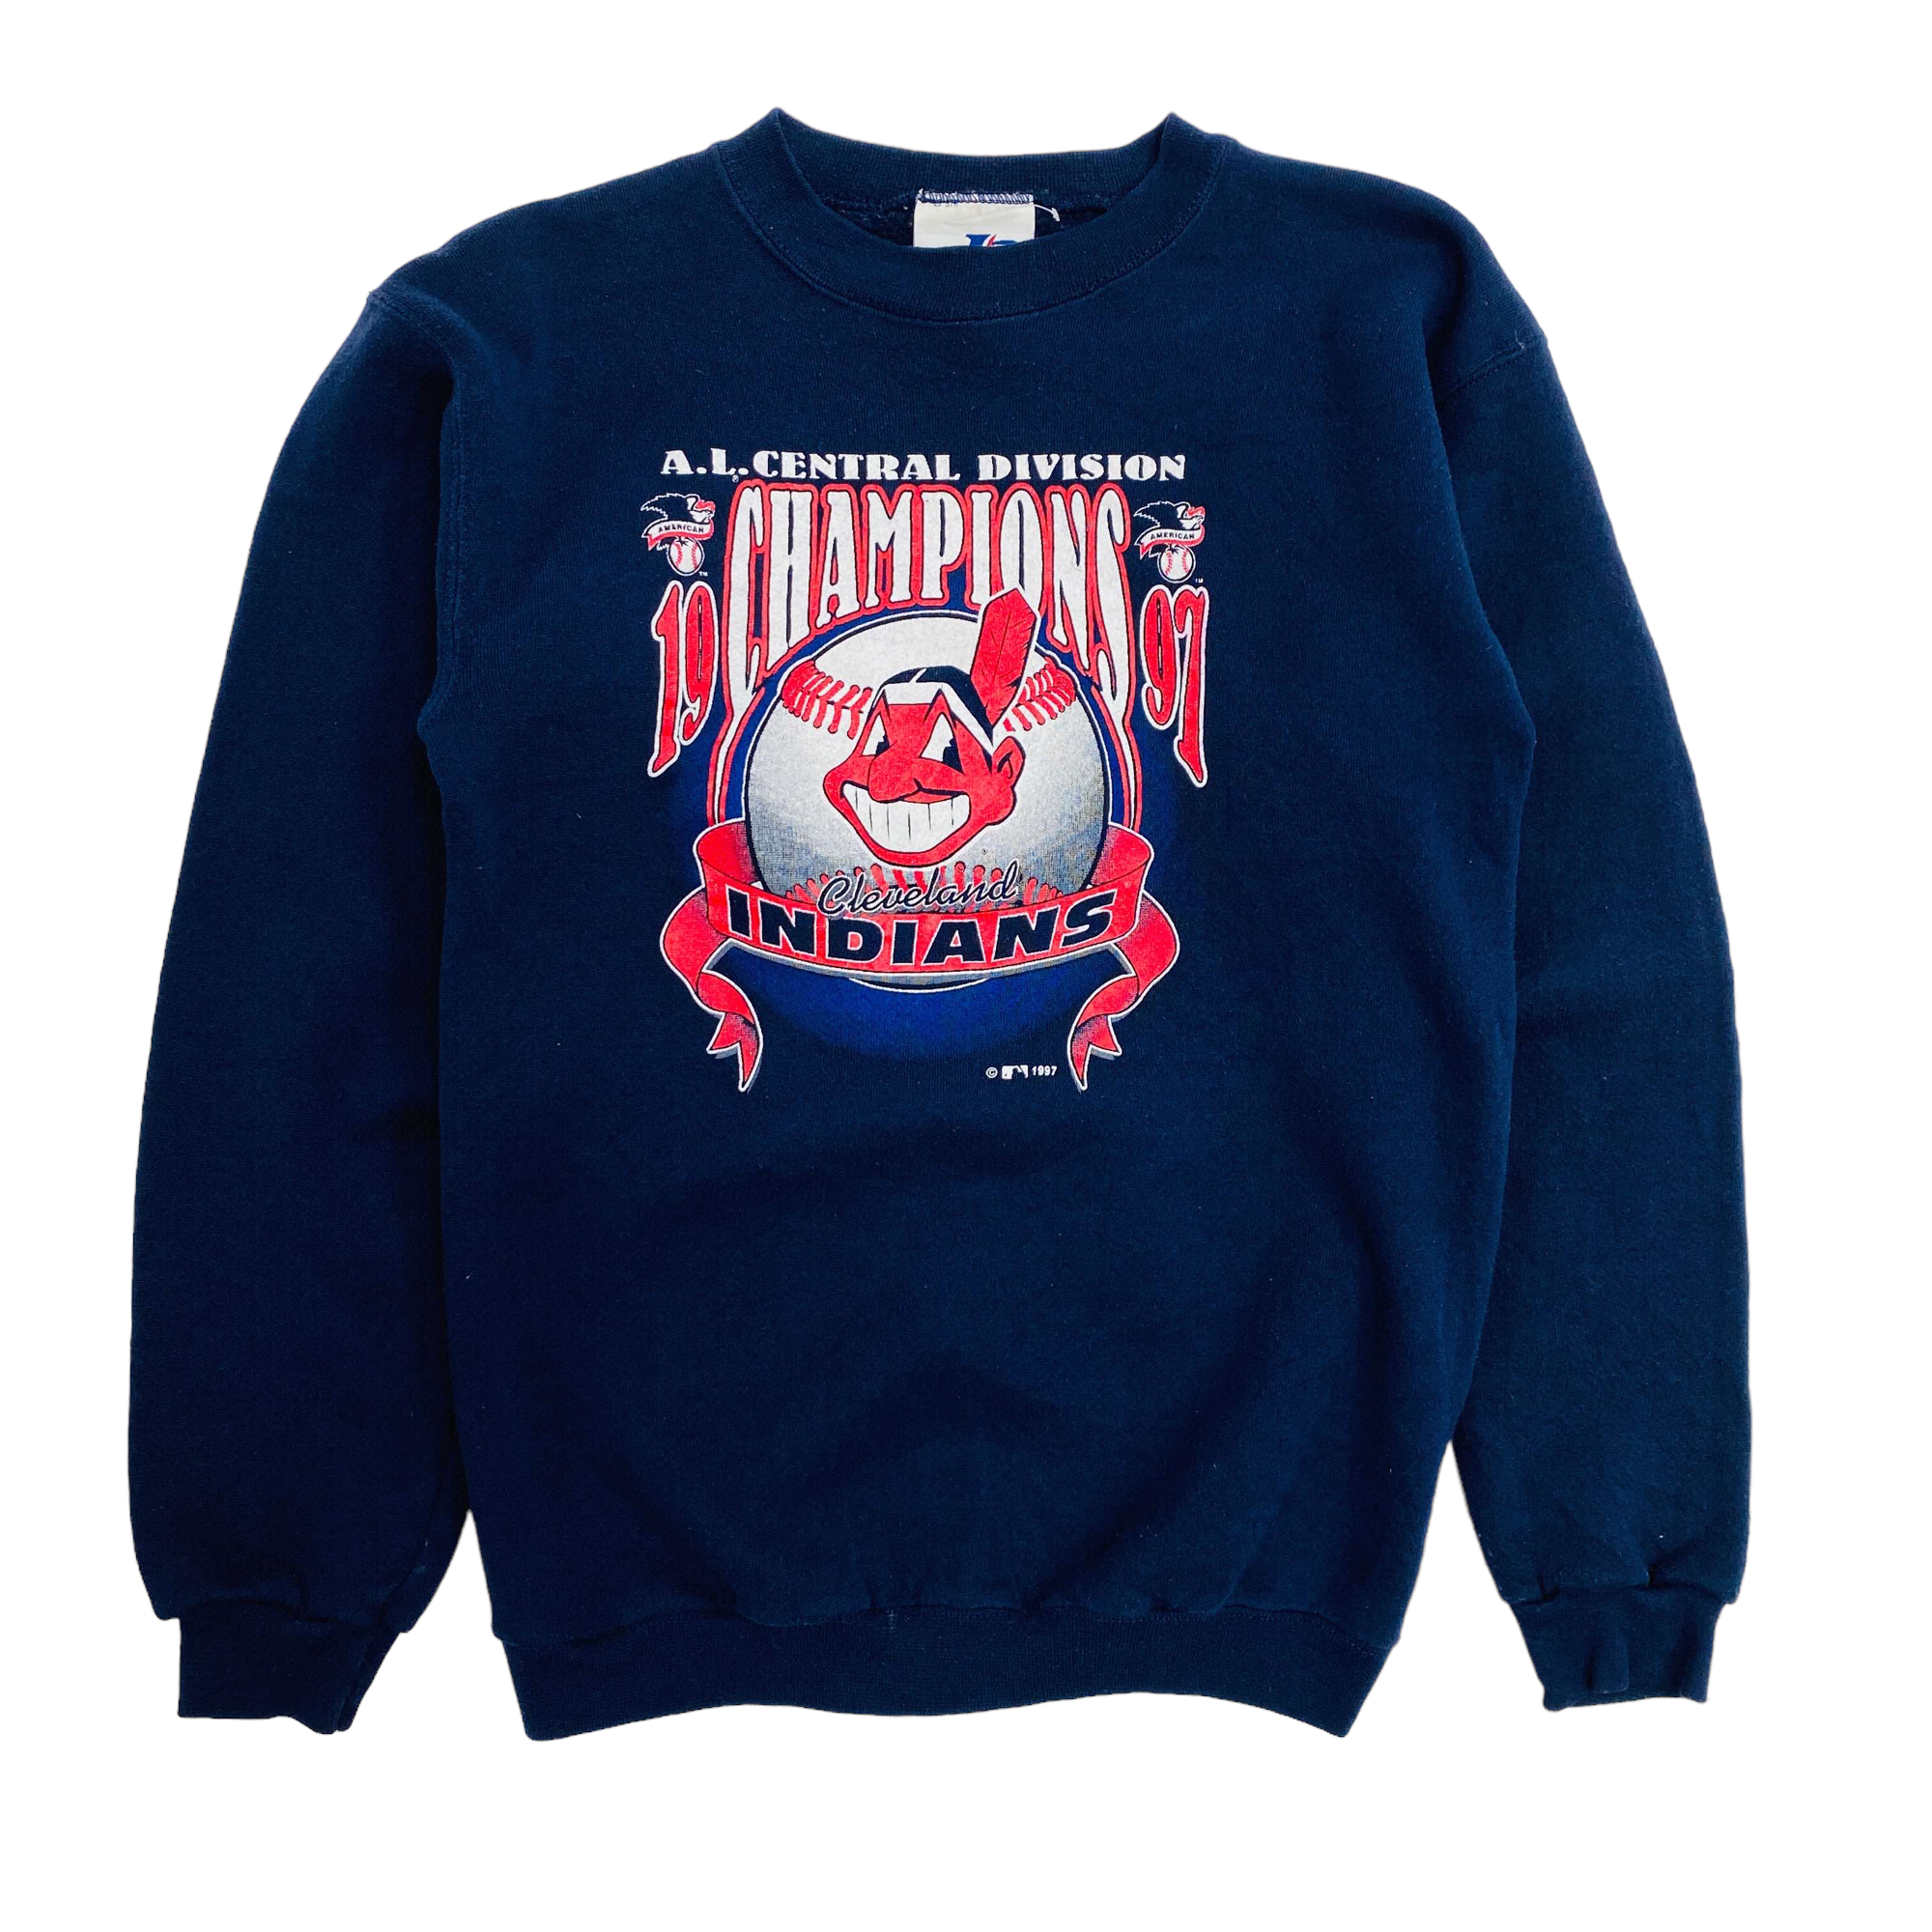 1997 Cleveland Indians Champions Sweatshirt - Small